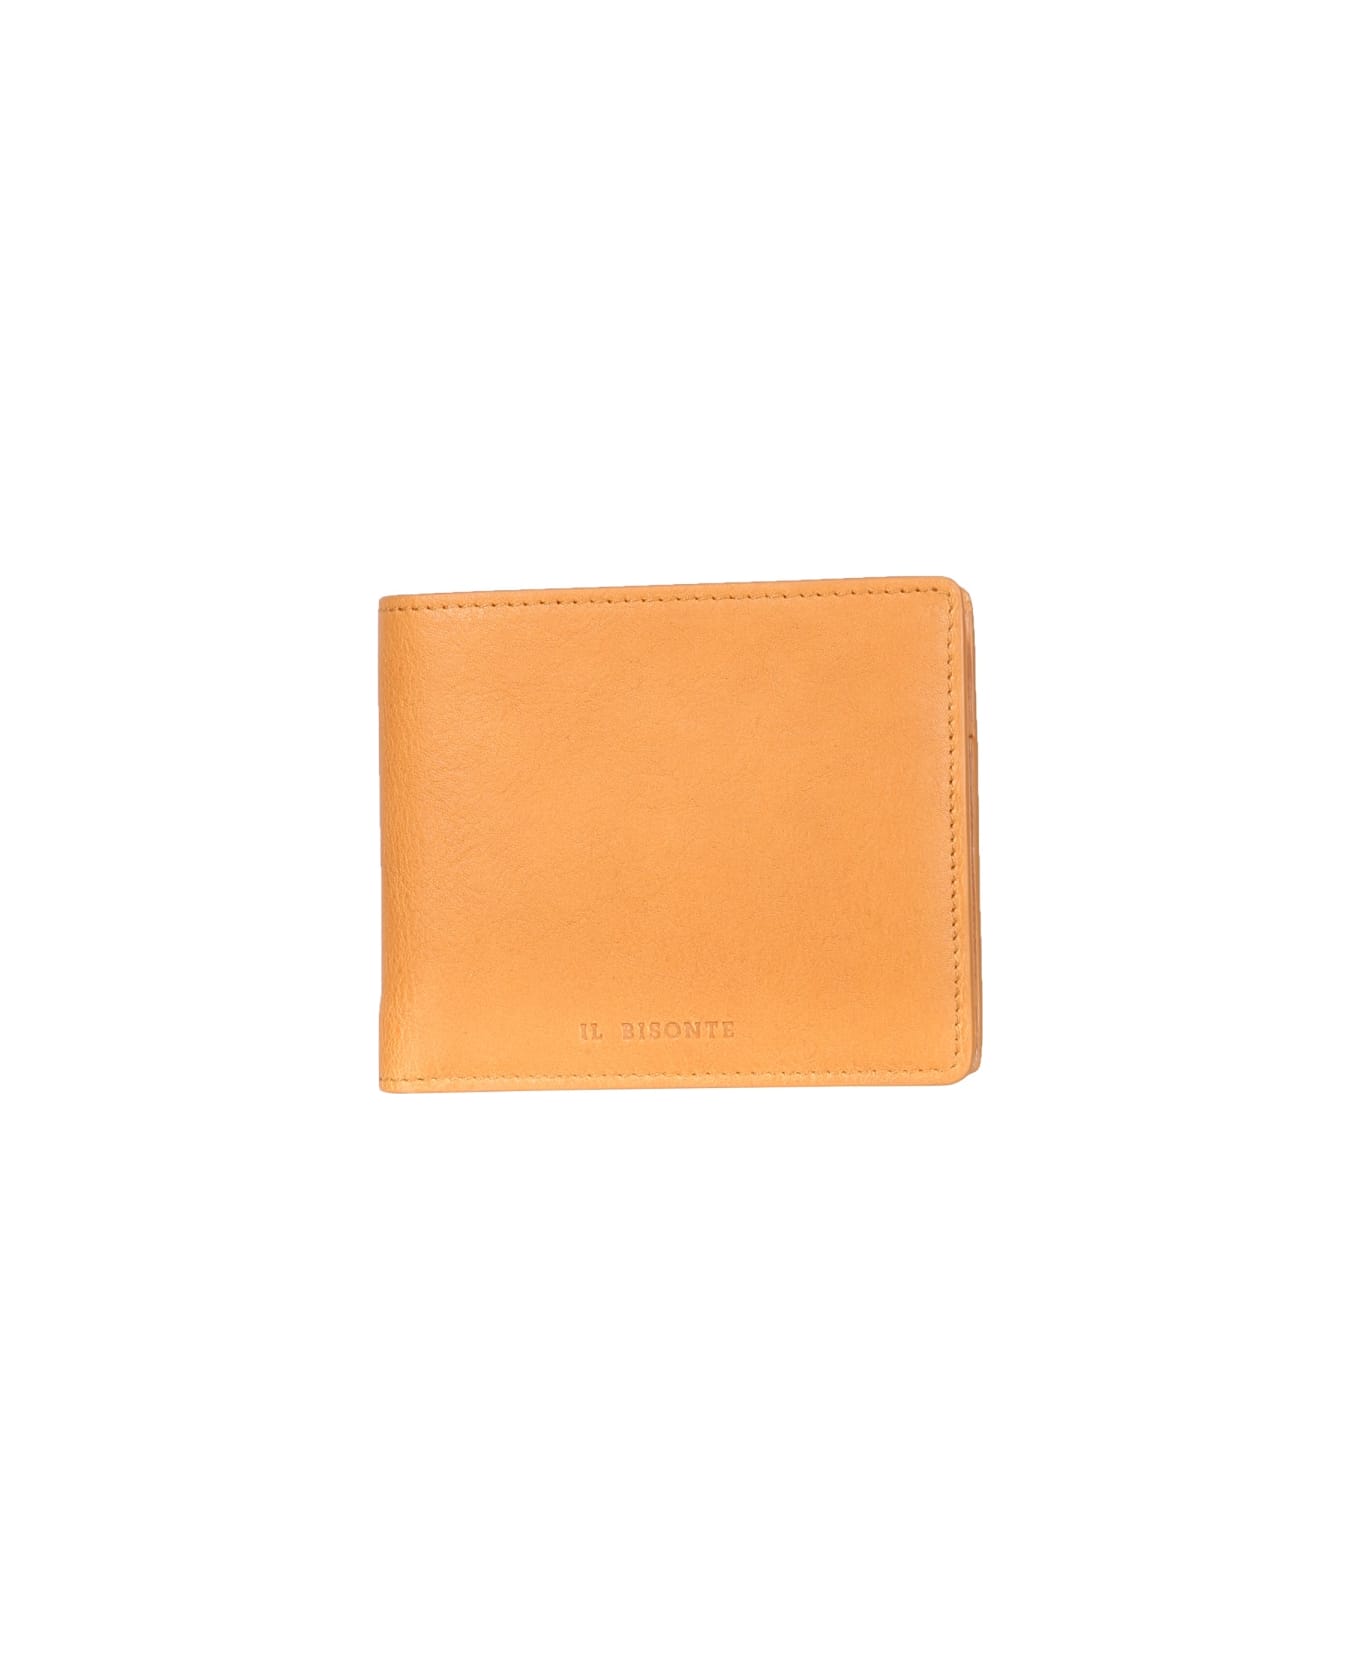 Il Bisonte Leather Bifold Wallet - BEIGE 財布